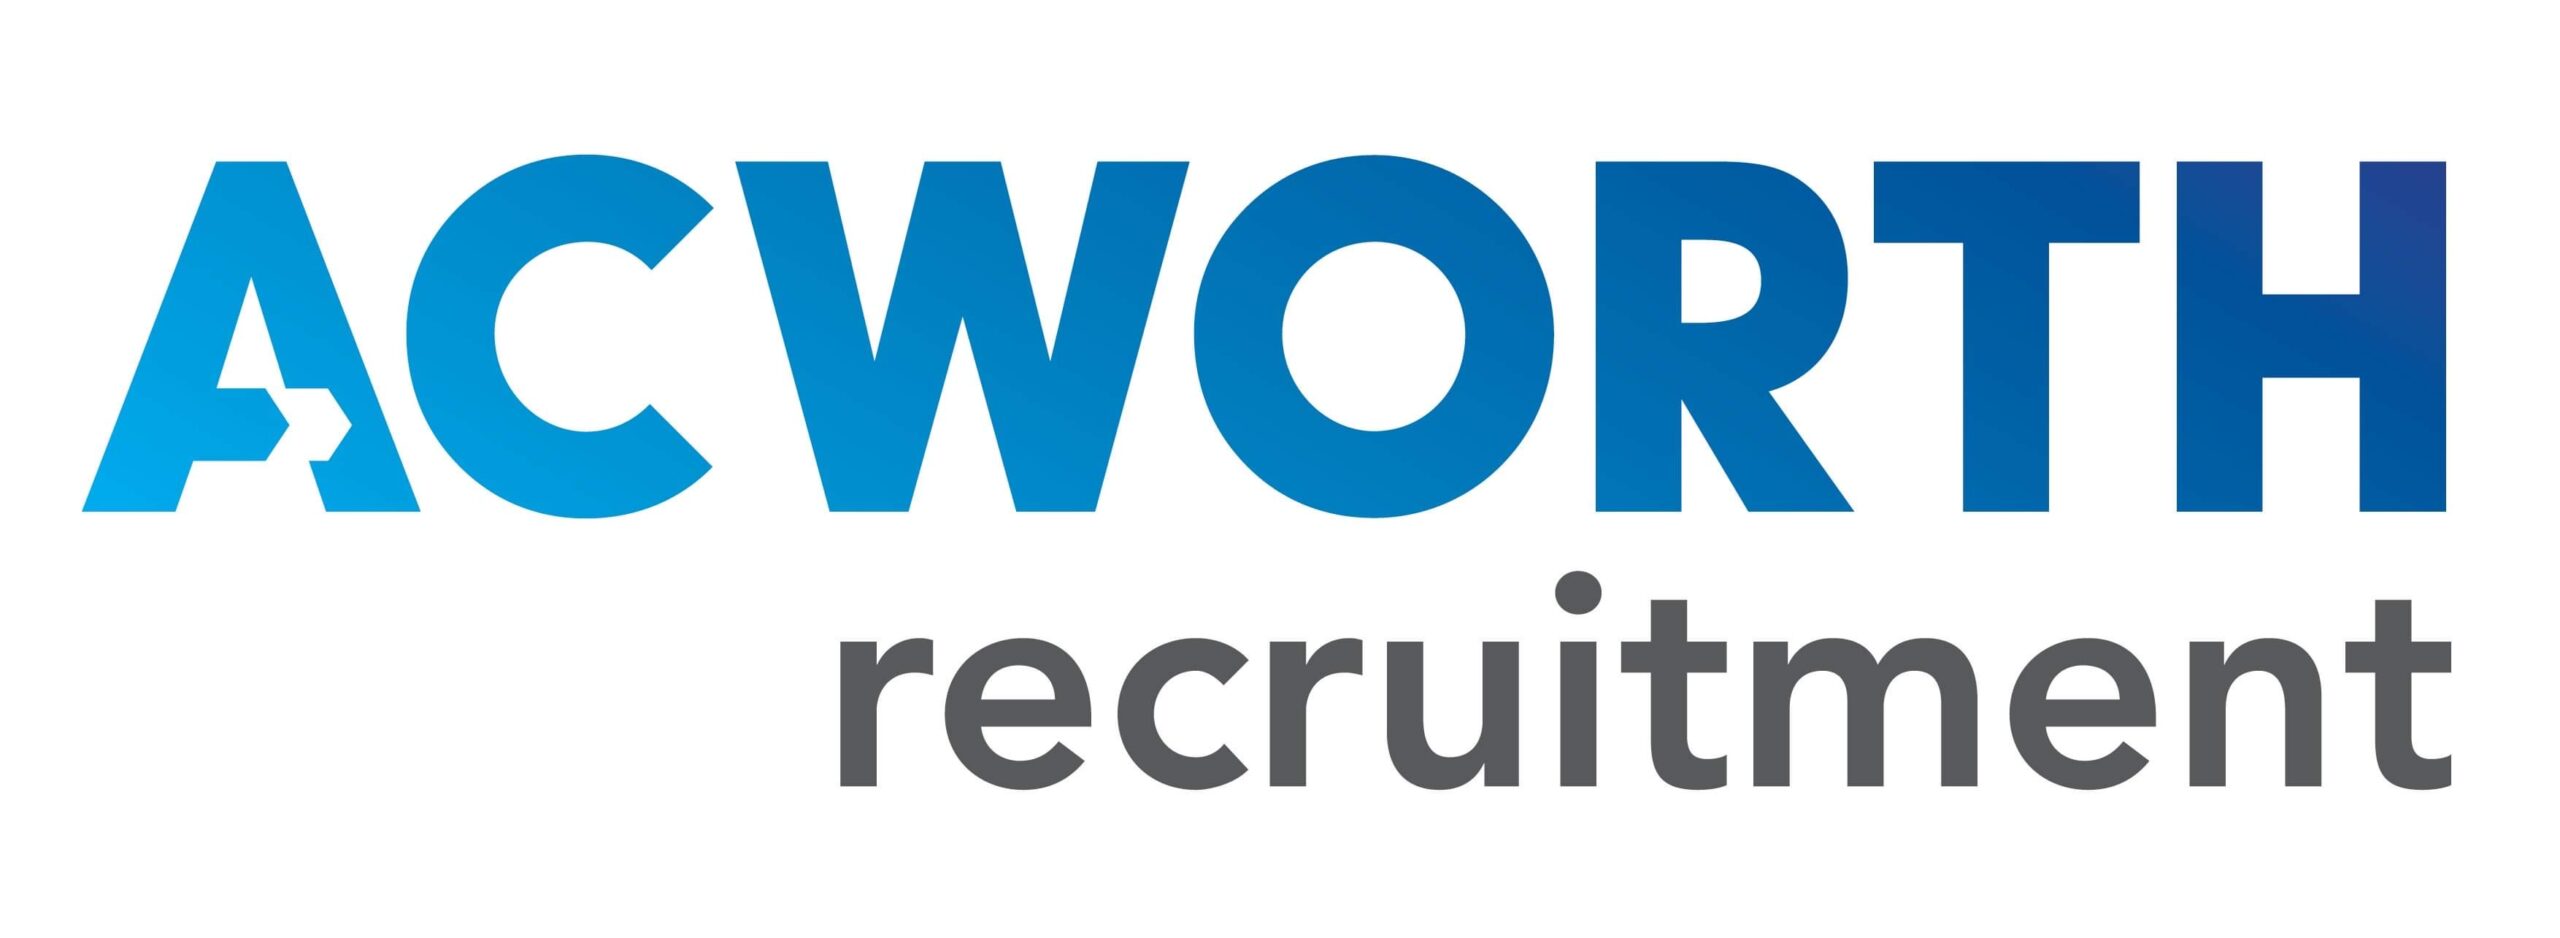 Acworth Recruitment